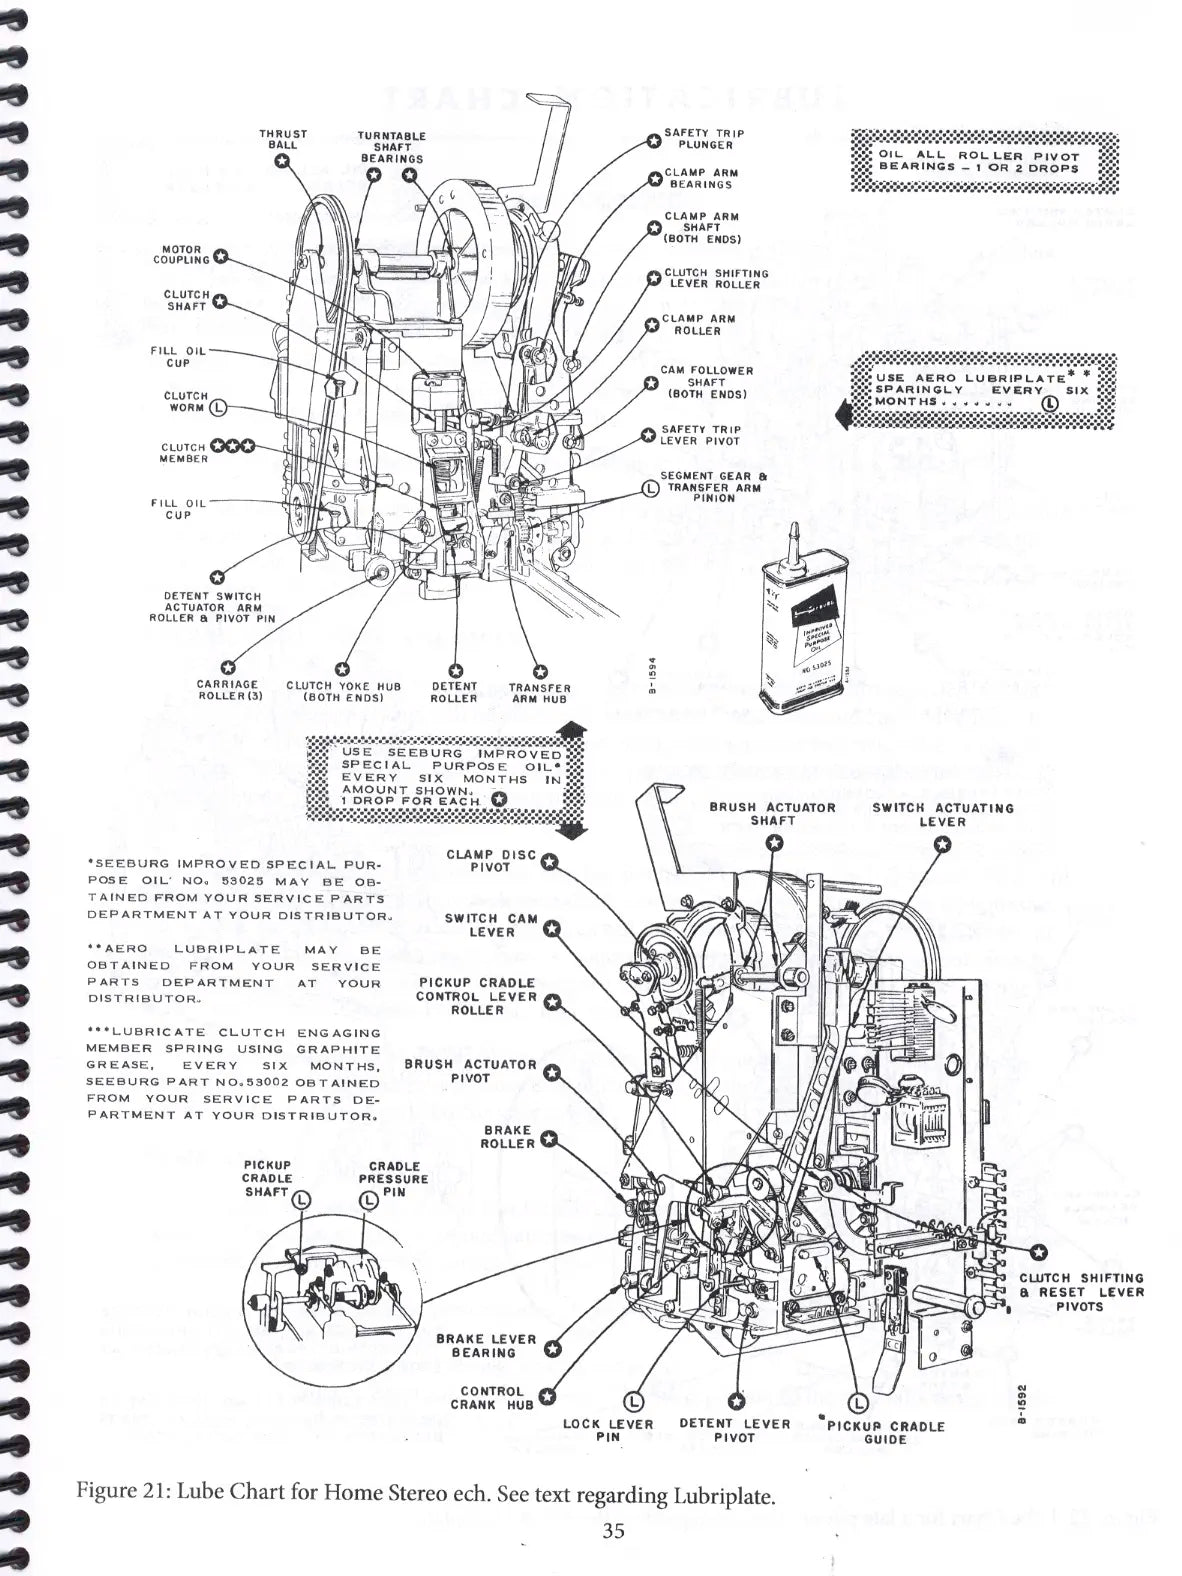 Ron Rich's Seeburg Mechanism Guide (Jukebox Repair), 2nd Edition